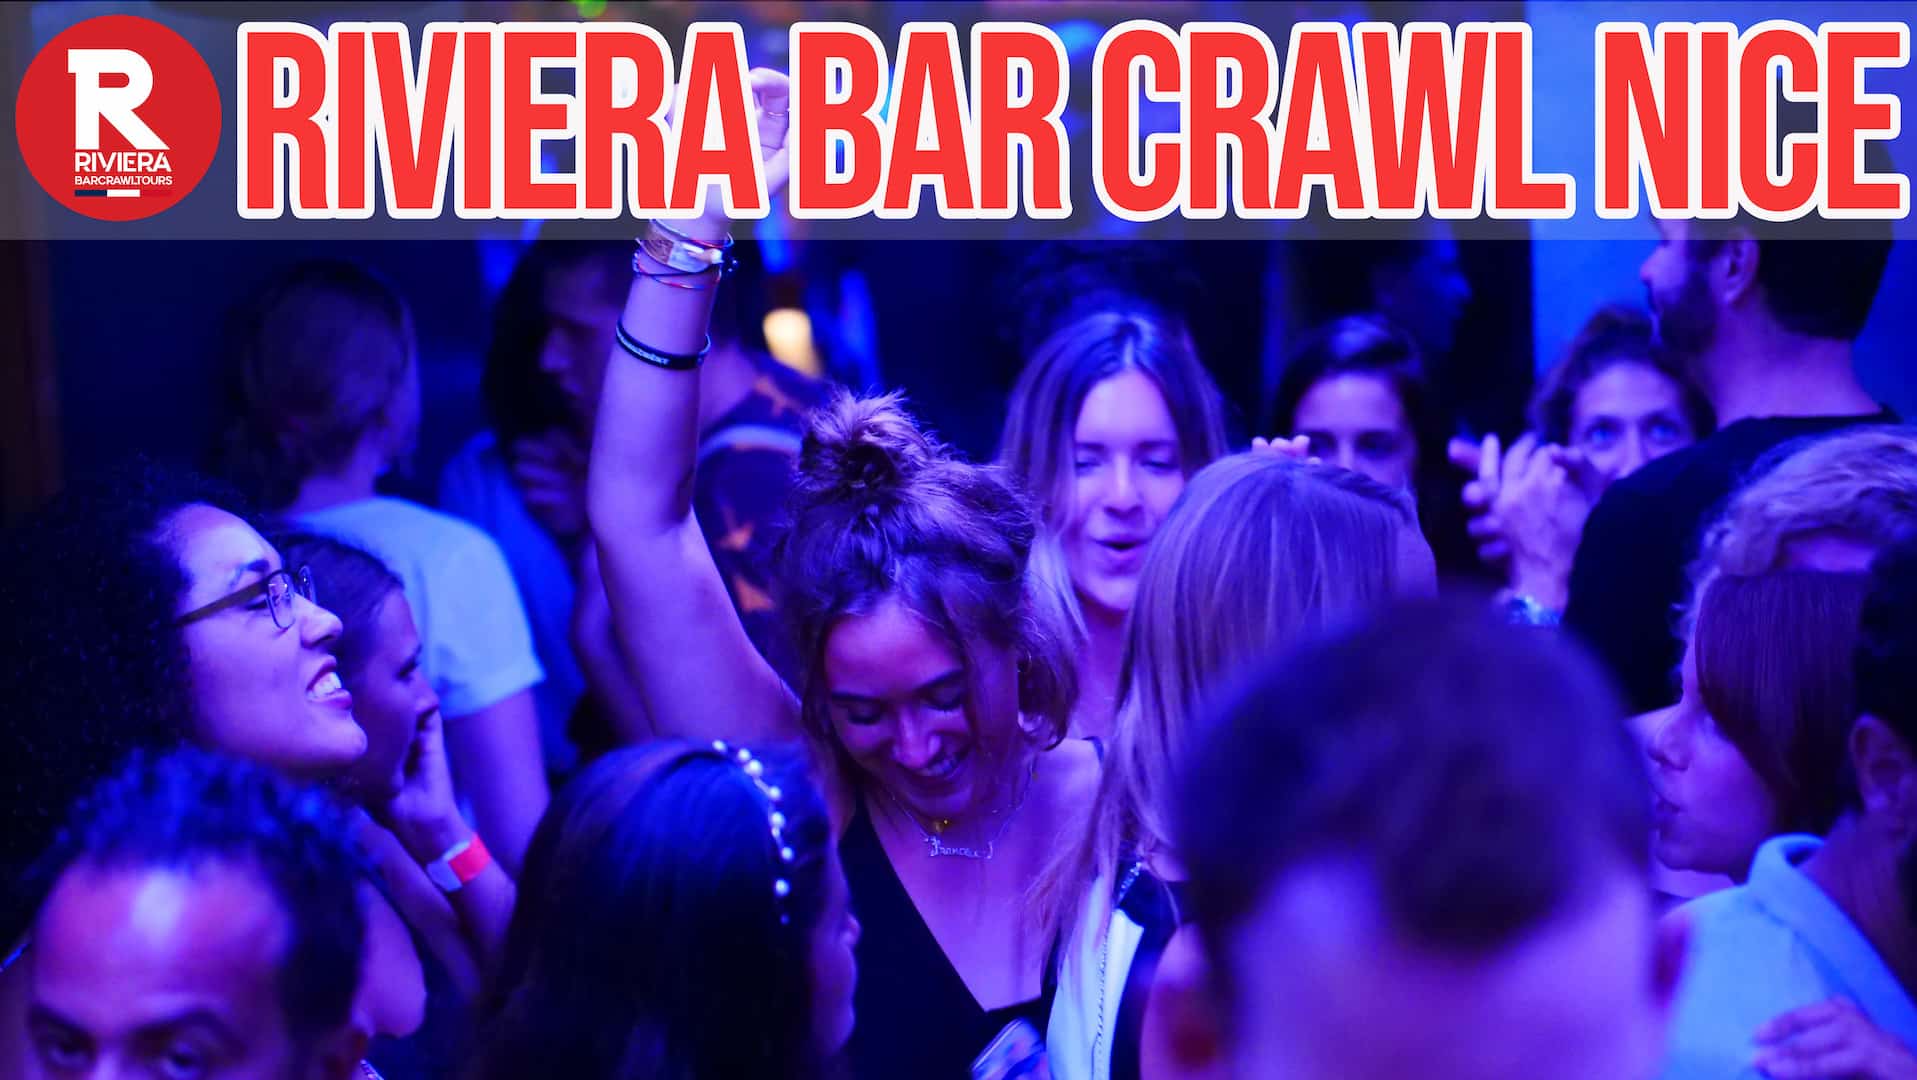 Riviera Bar Crawl Nice